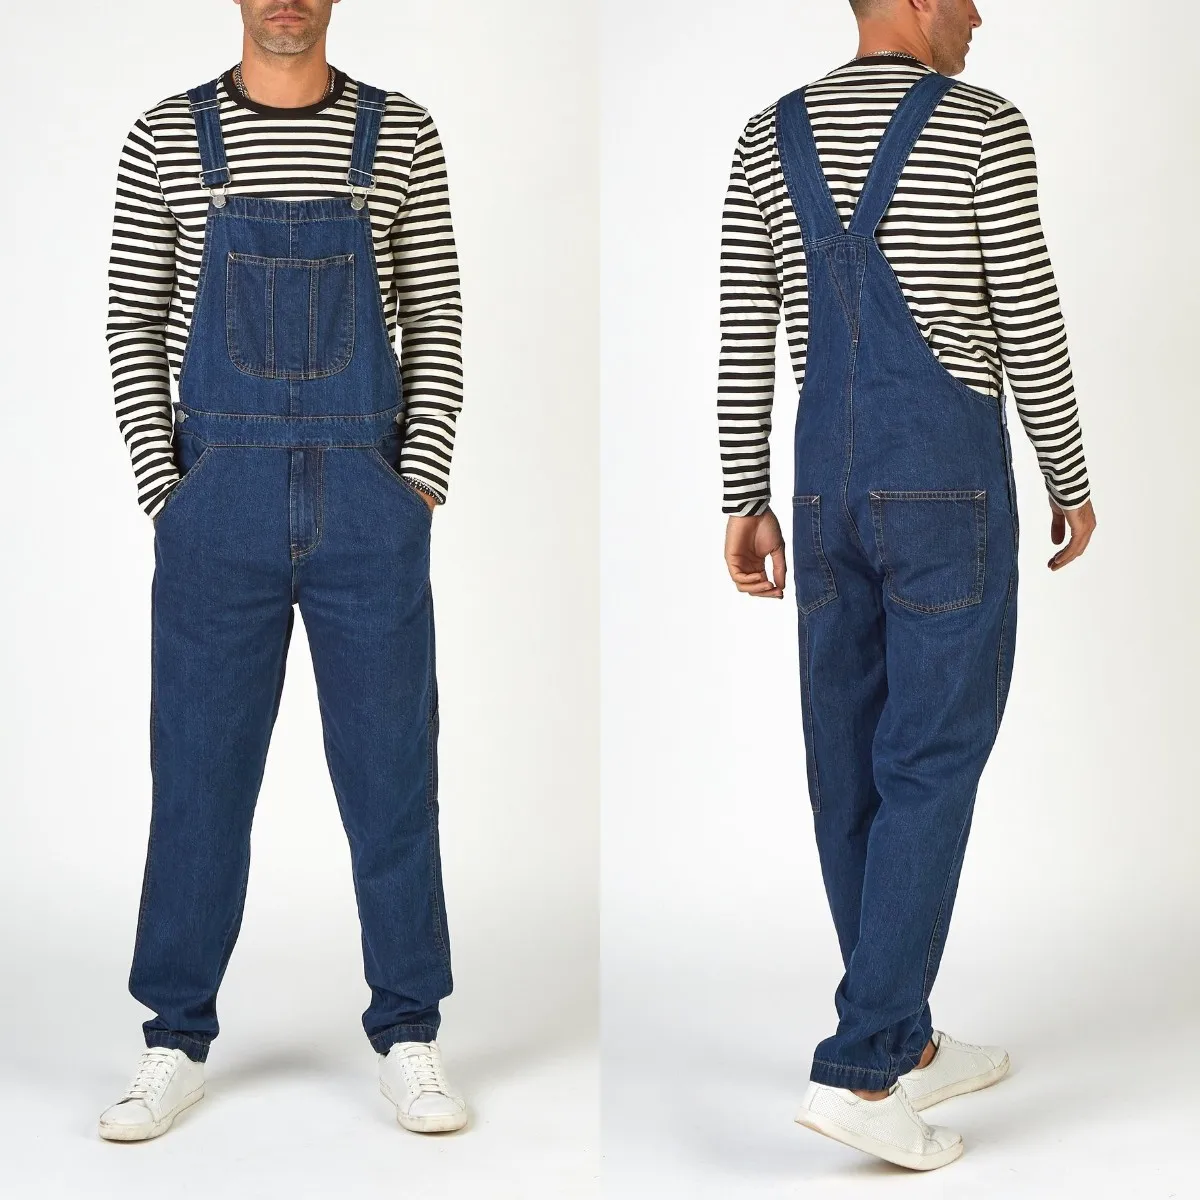 Men's Jeans Overalls Jumpsuits Loose Distressed Denim Overalls For Man Suspender Pants